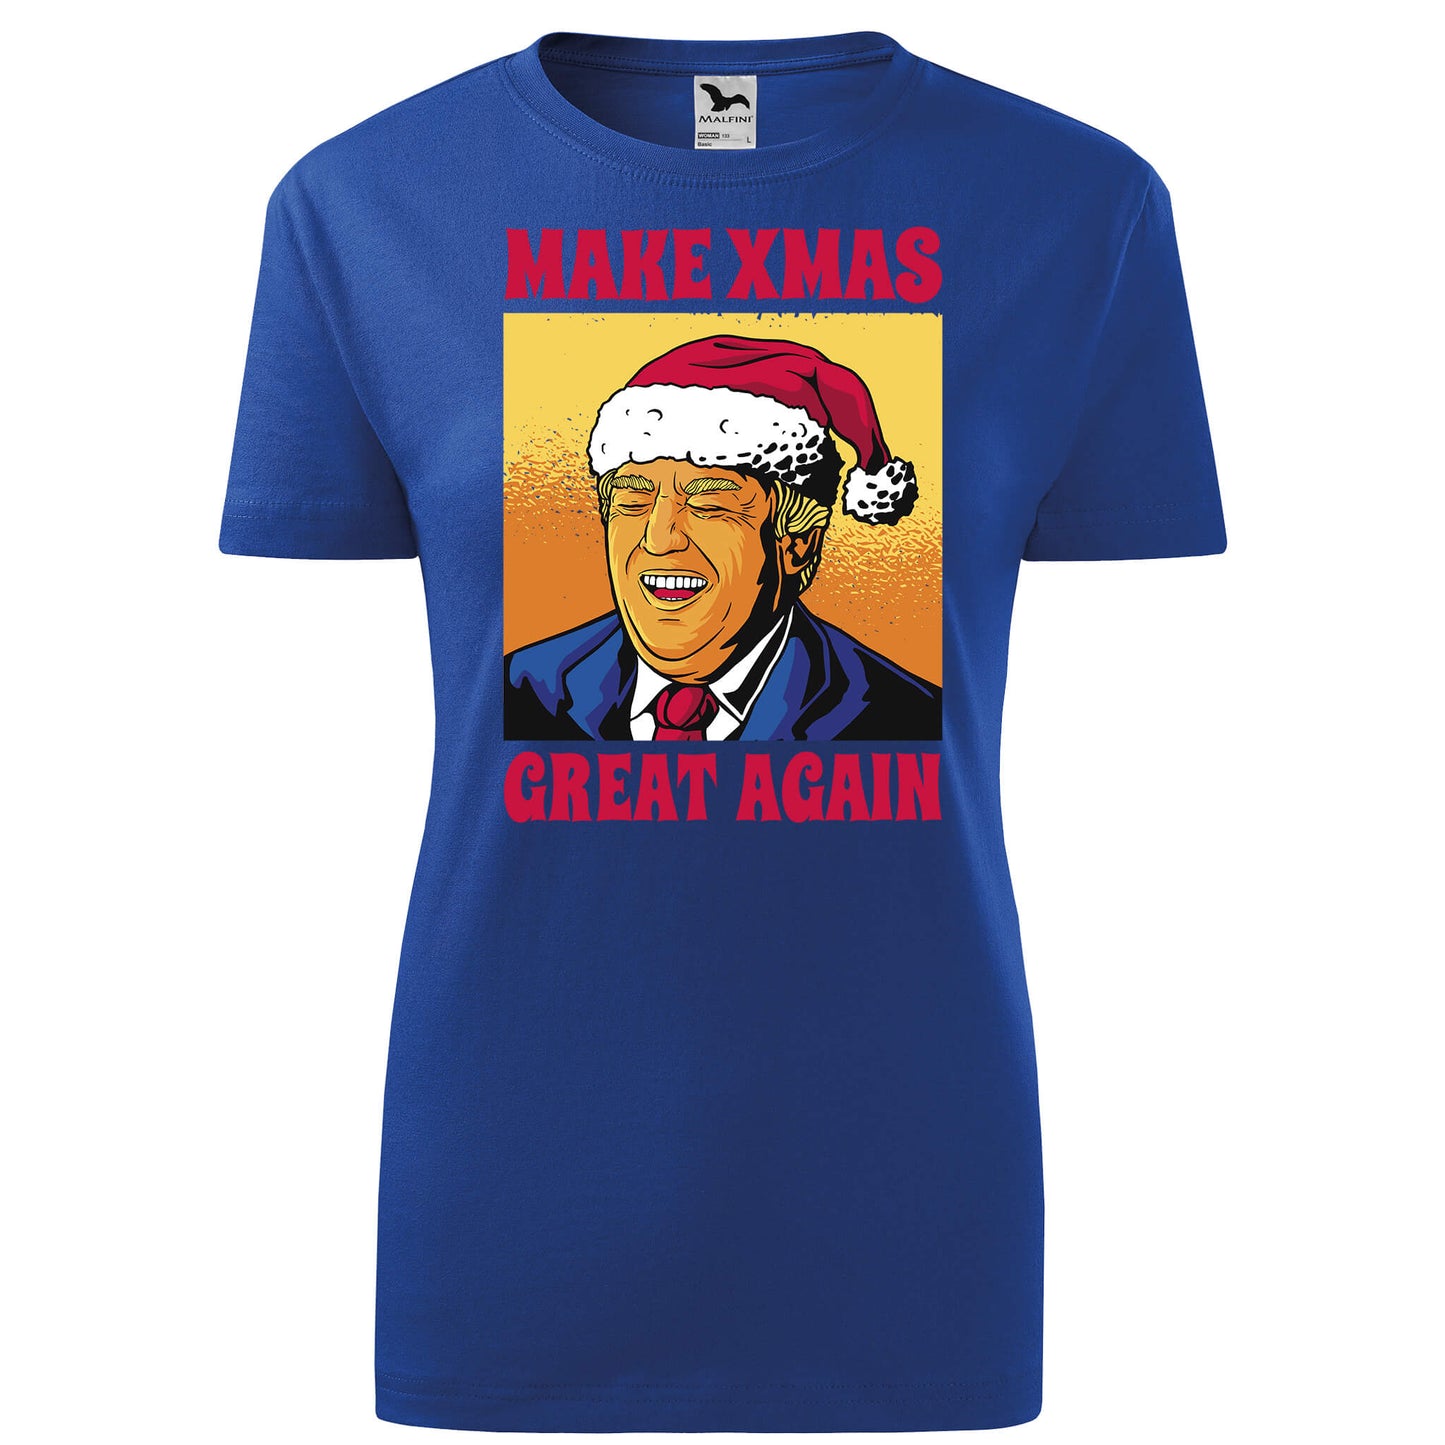 Donald trump make xmas great again t-shirt - rvdesignprint